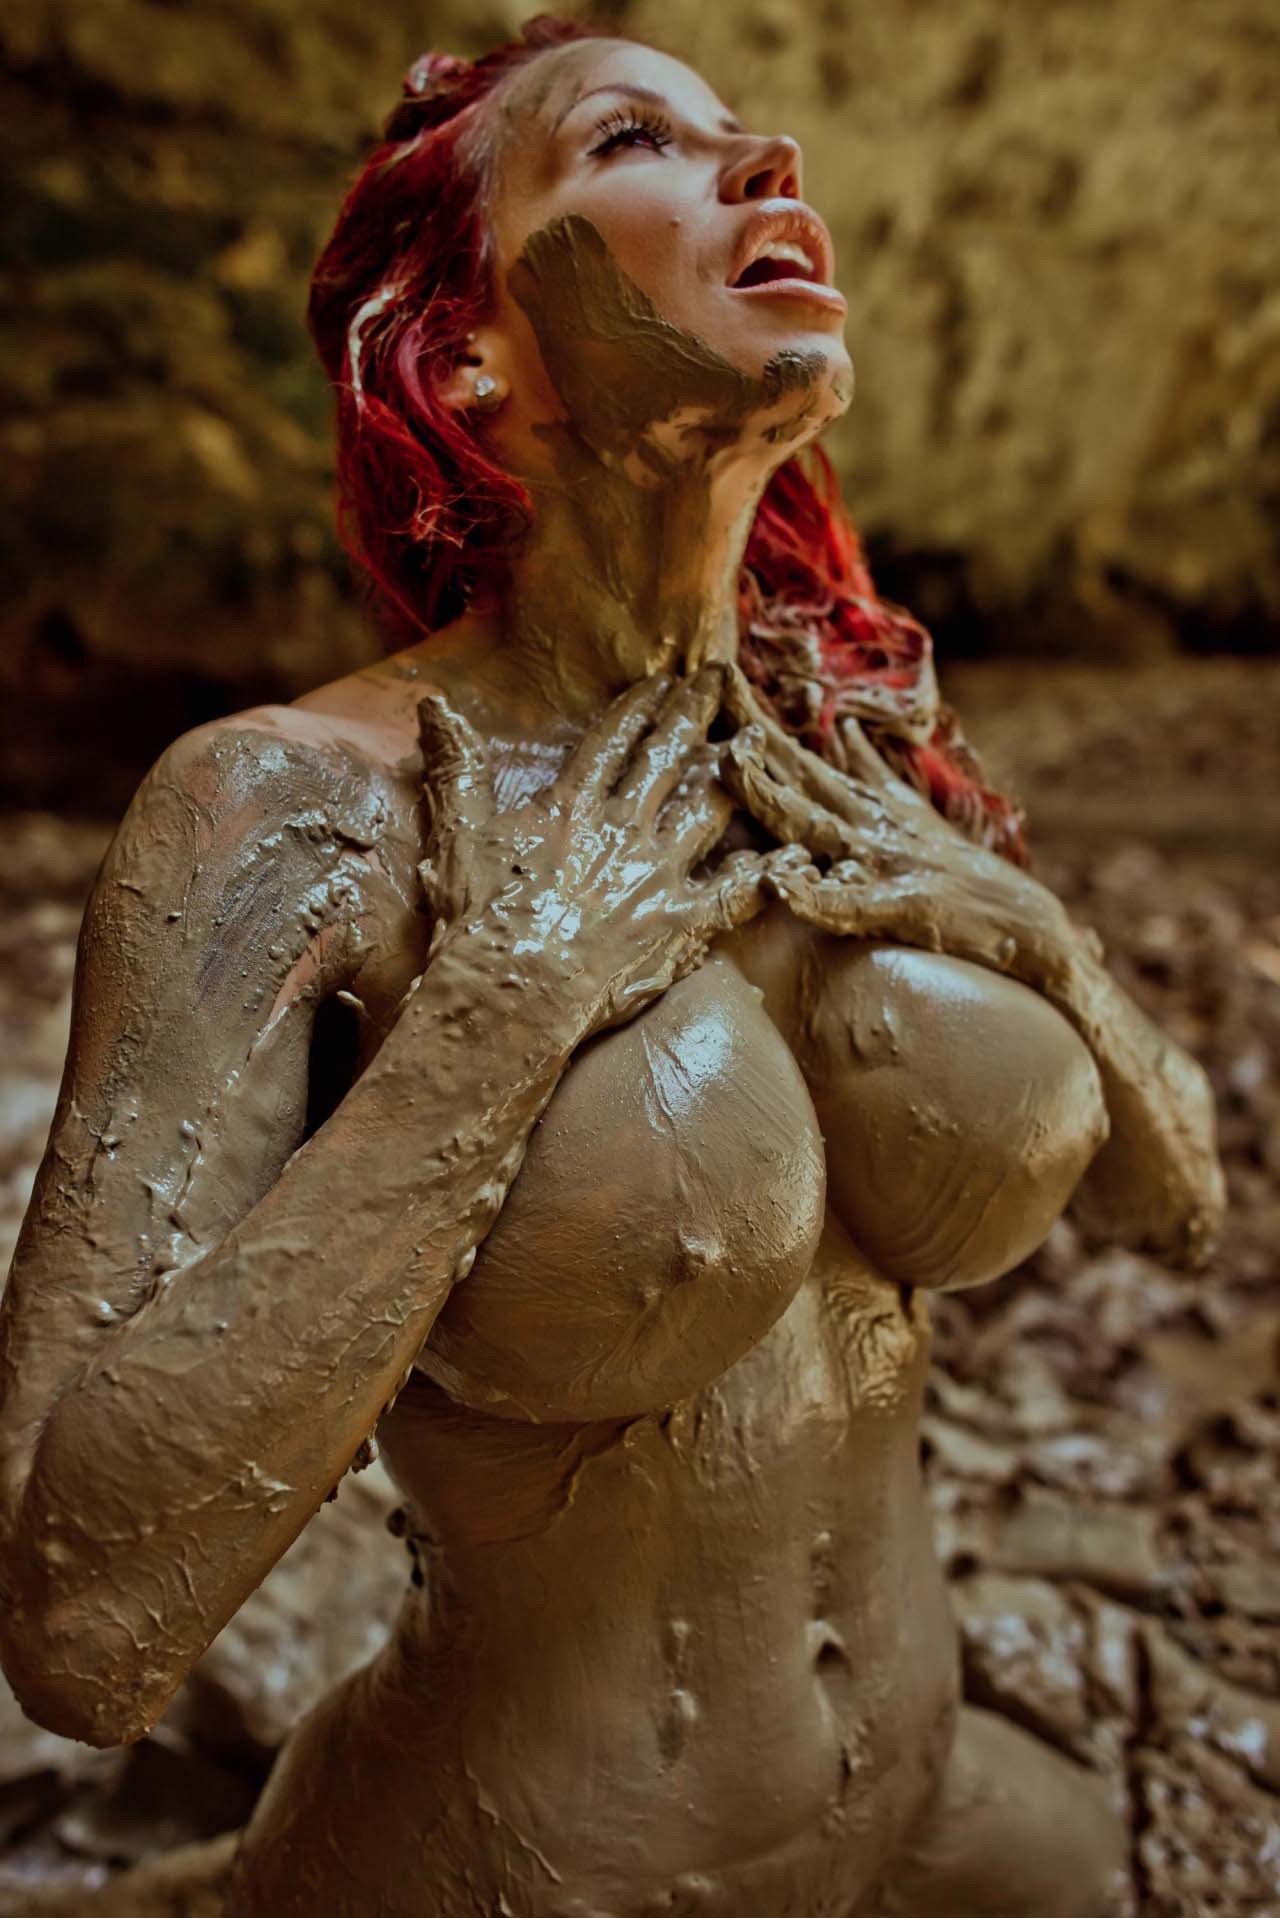 wamfan18:Bianca Beauchamp playing in the mud